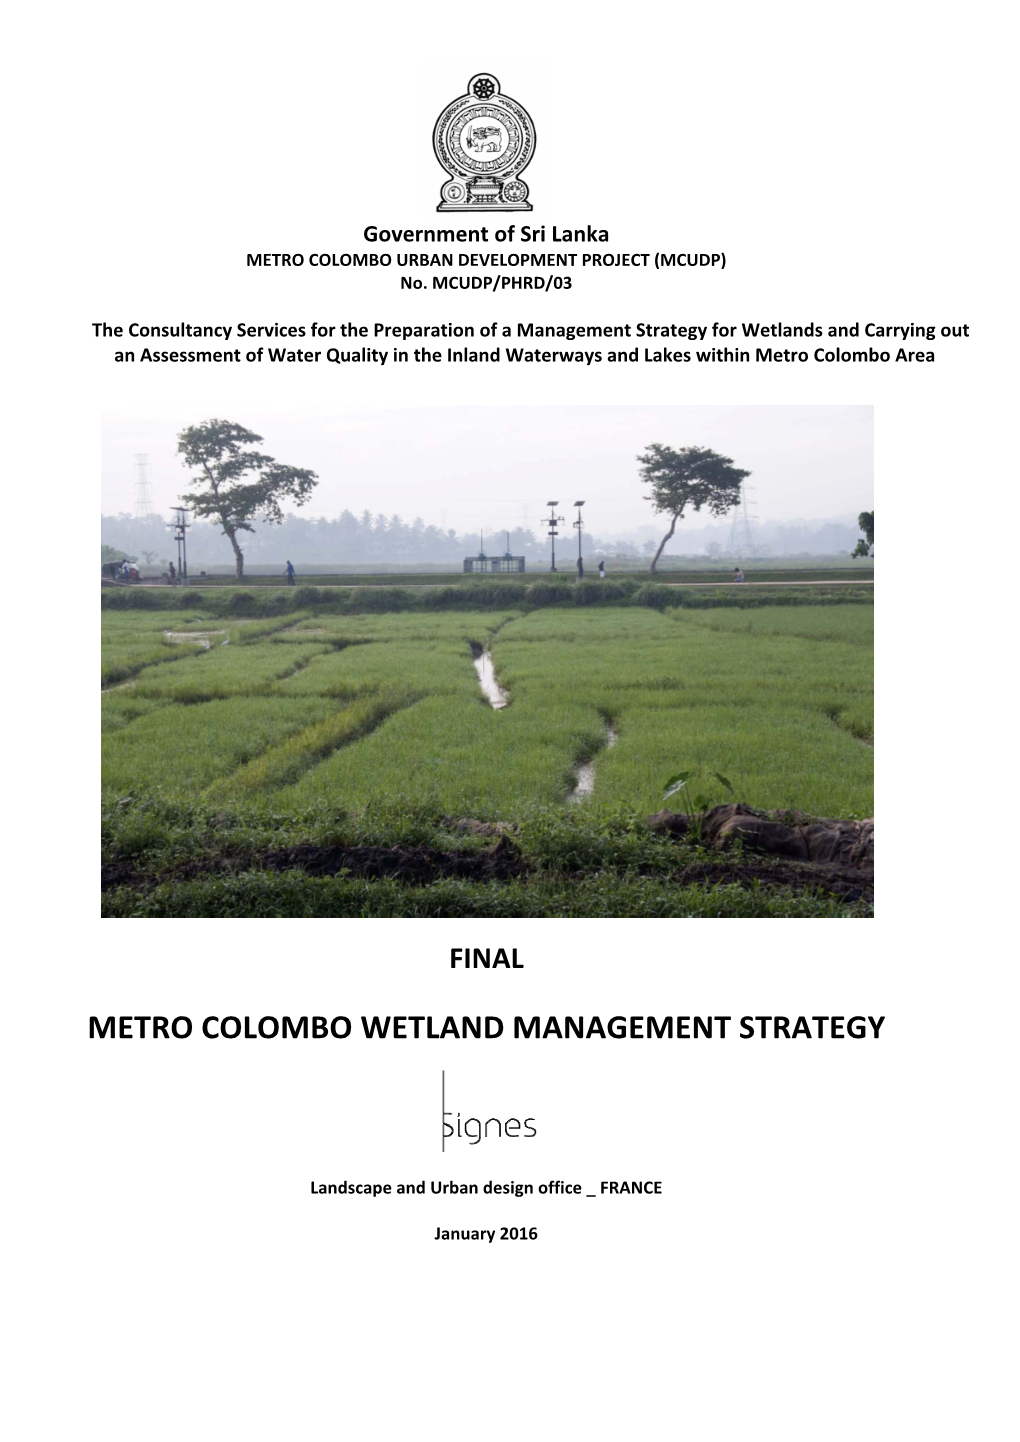 Metro Colombo Wetland Management Strategy